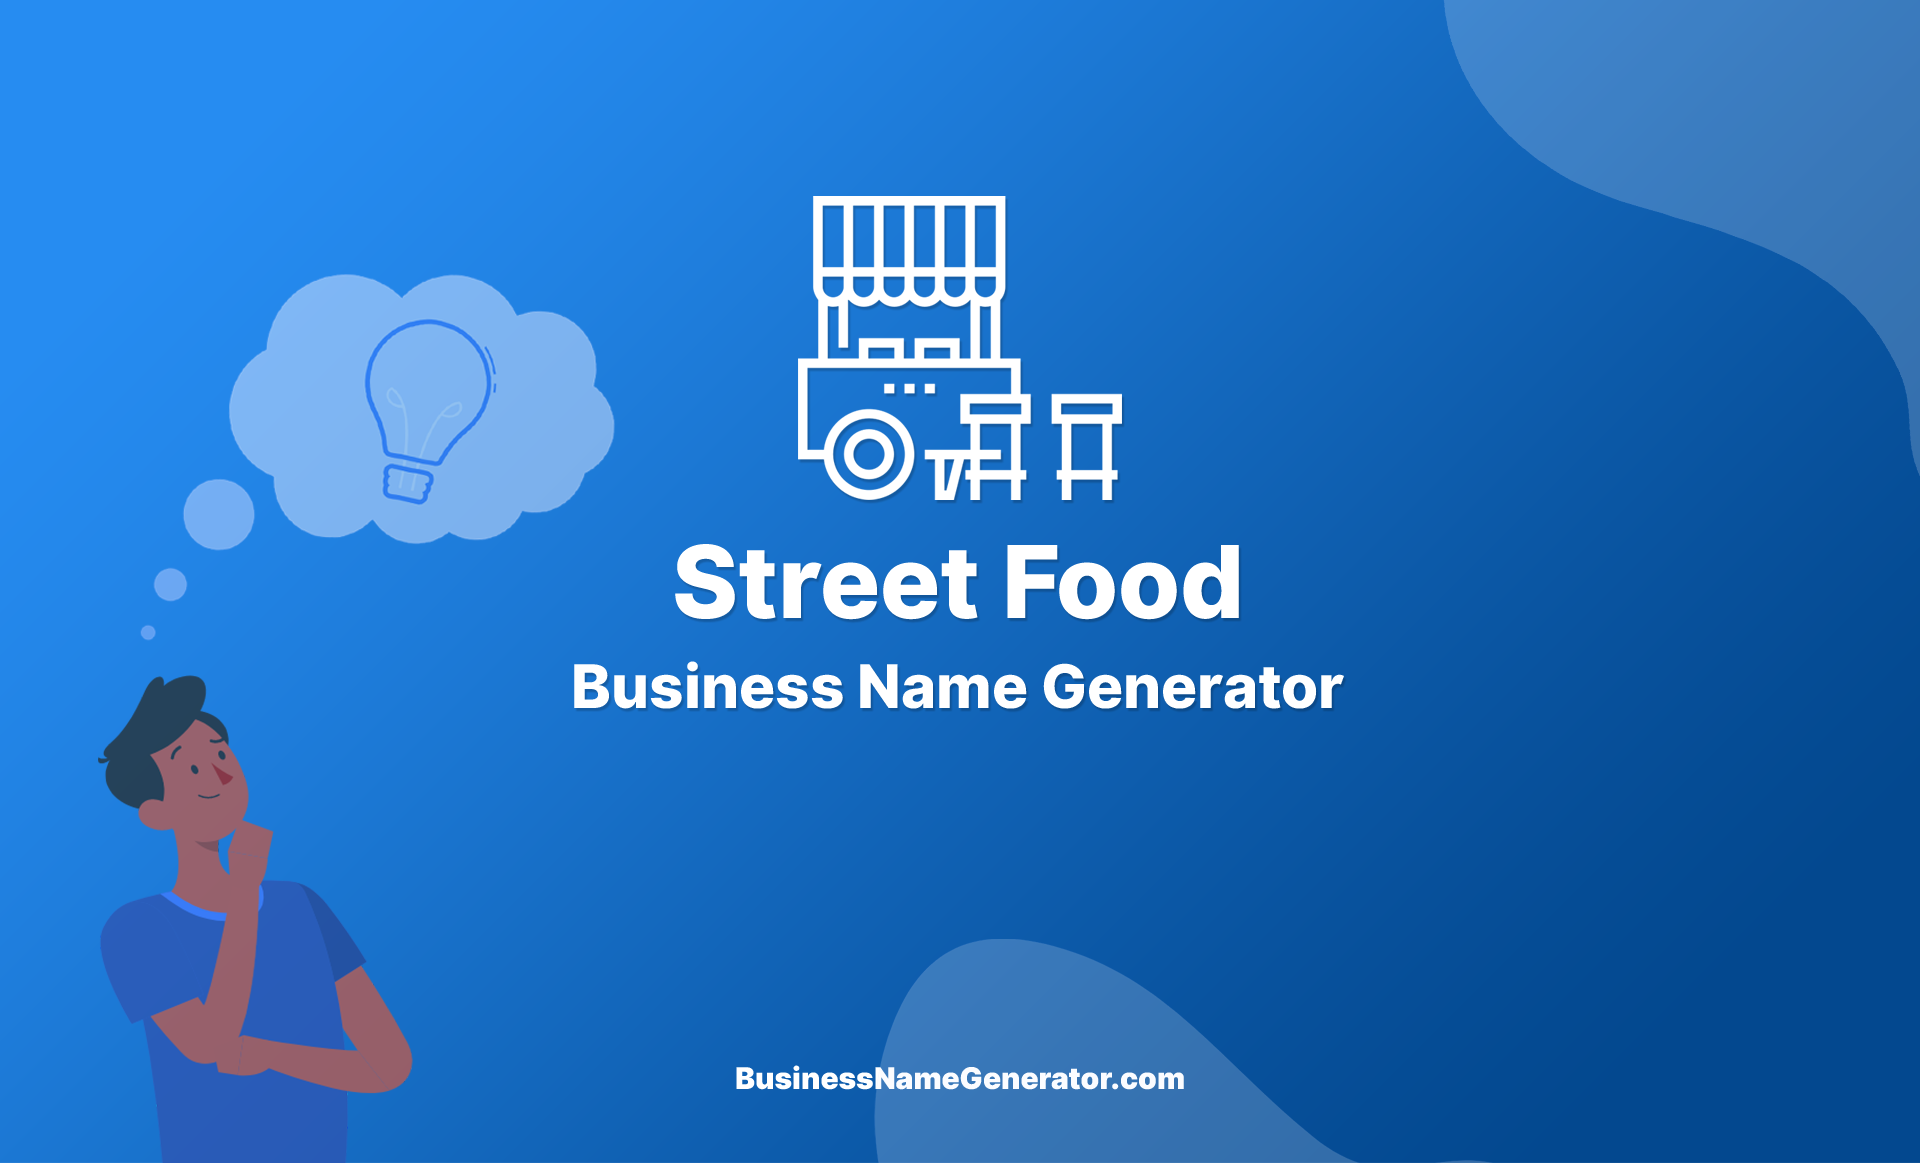 Street Food Business Name Generator